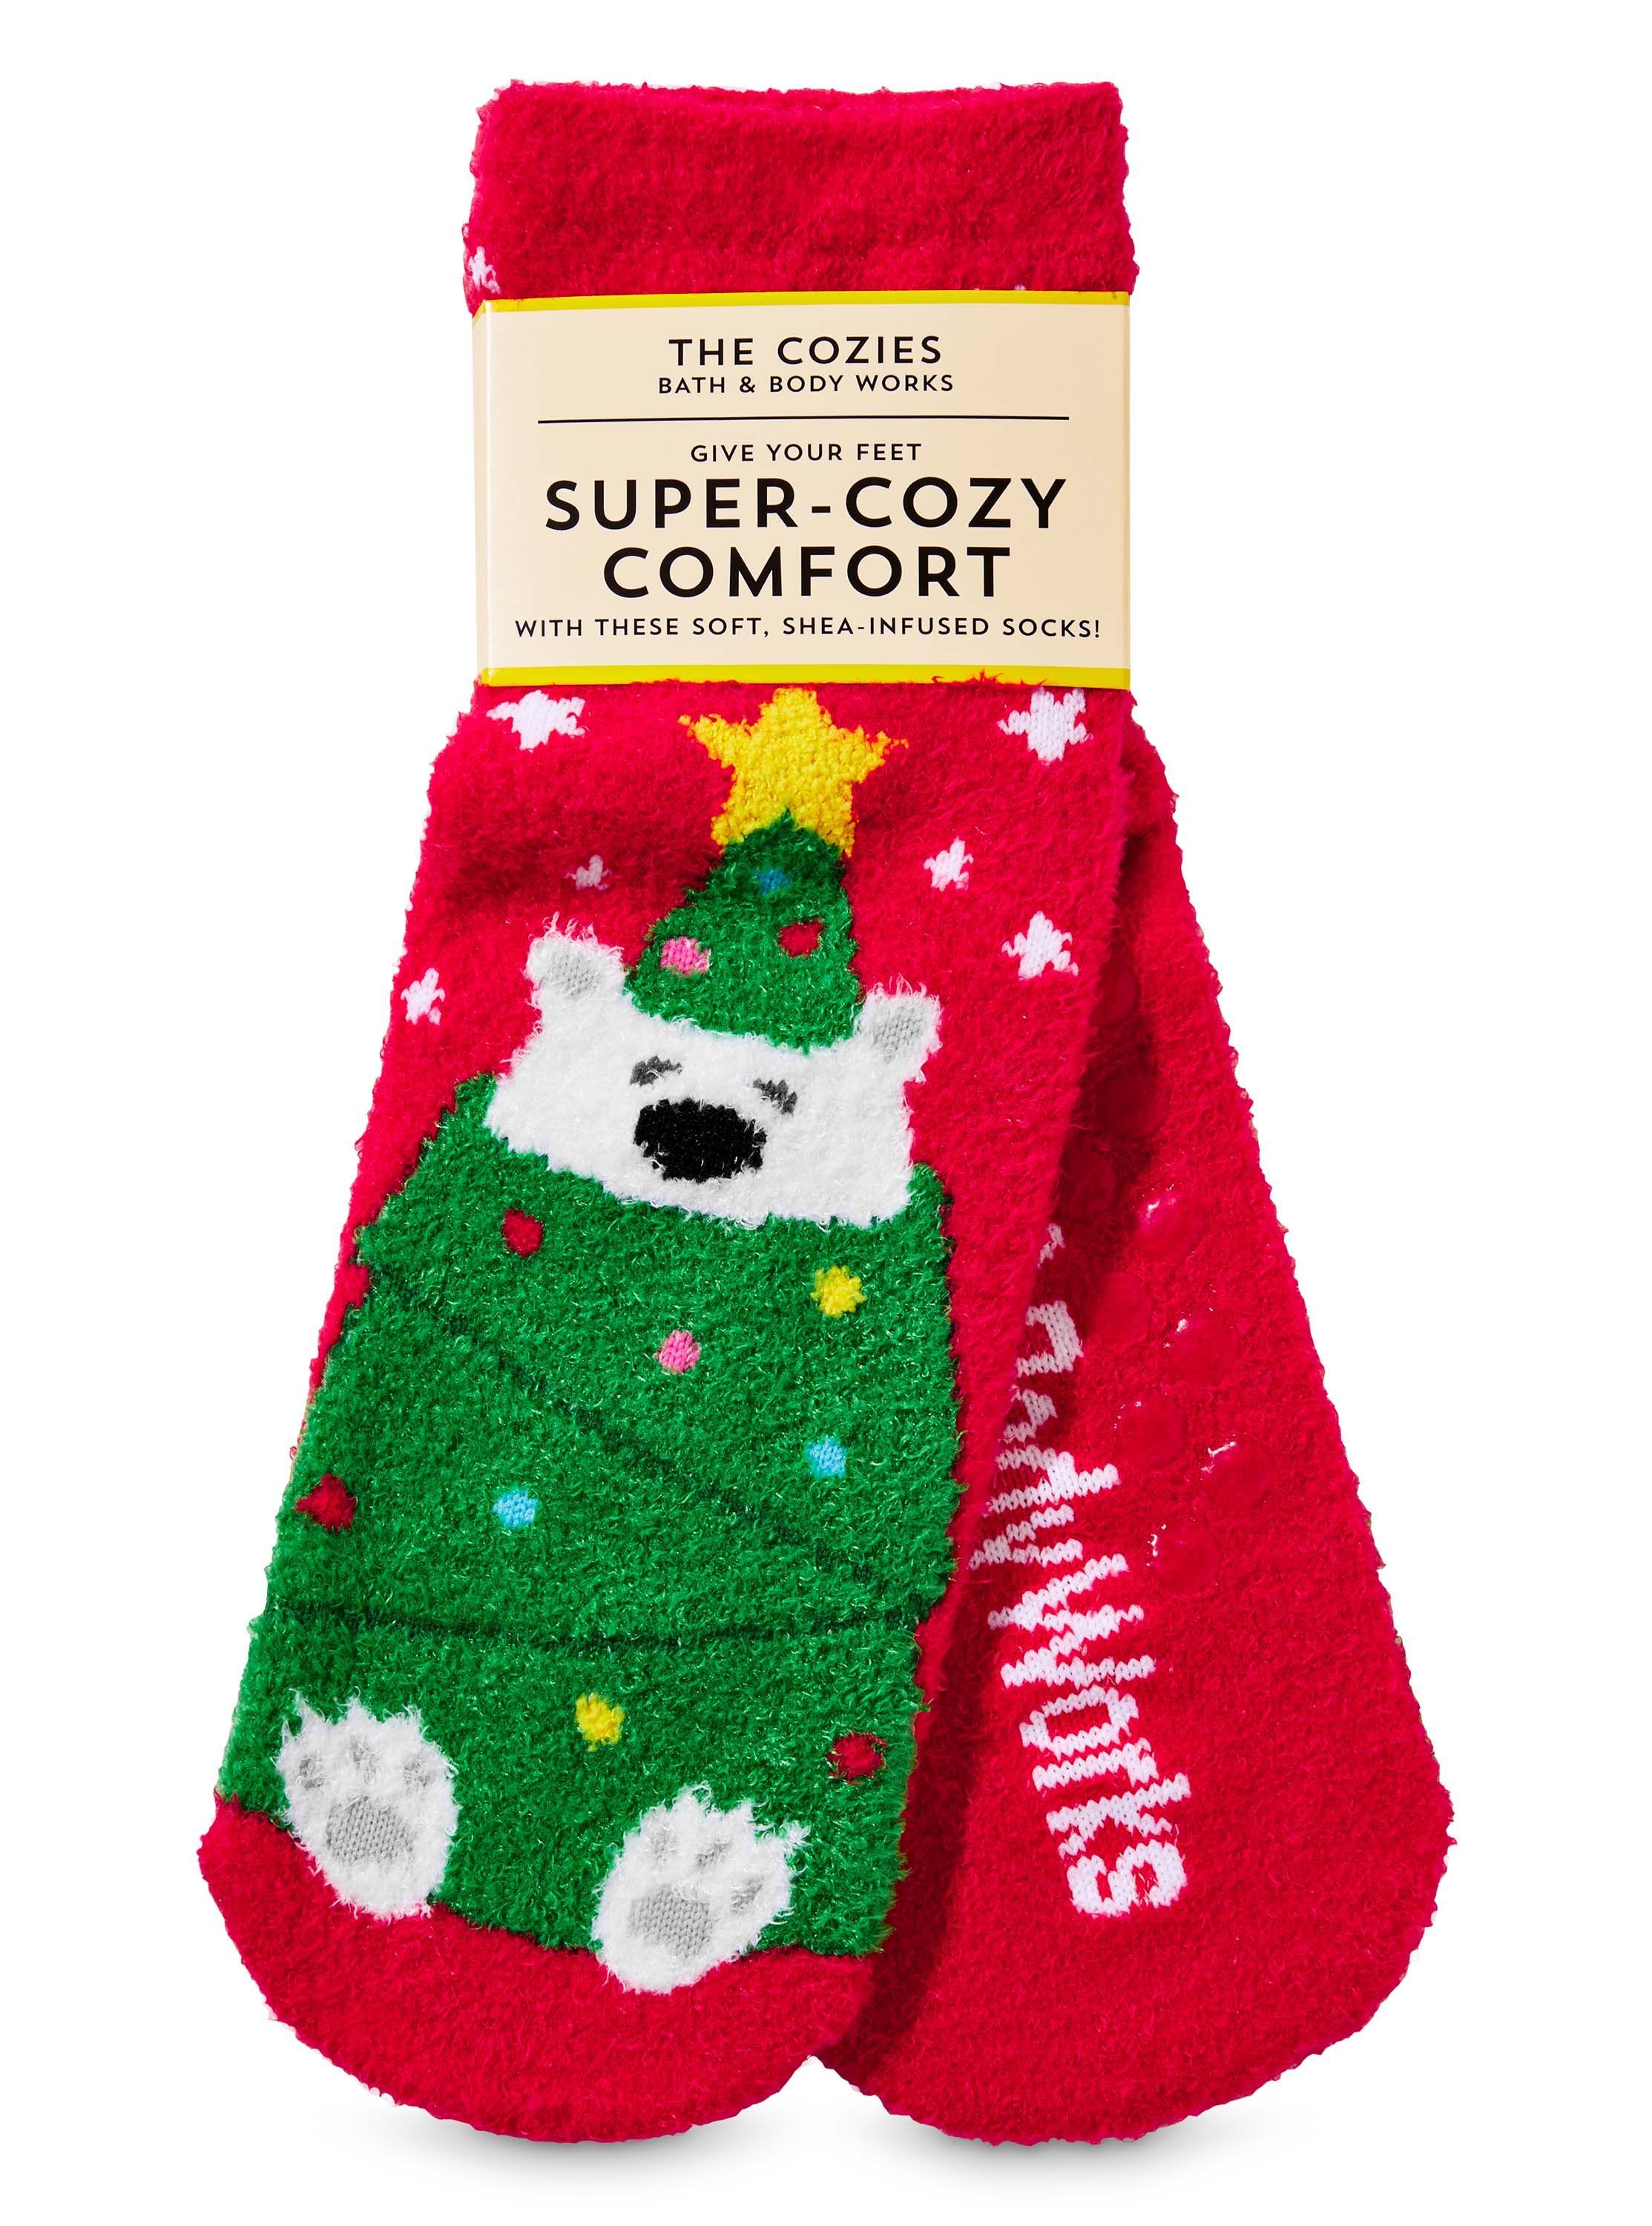 1/12Pairs Women's Christmas Socks Cotton Knit Long Socks for Girls Novelty Christmas Gifts,Cozy Funny Xmas Holiday Socks